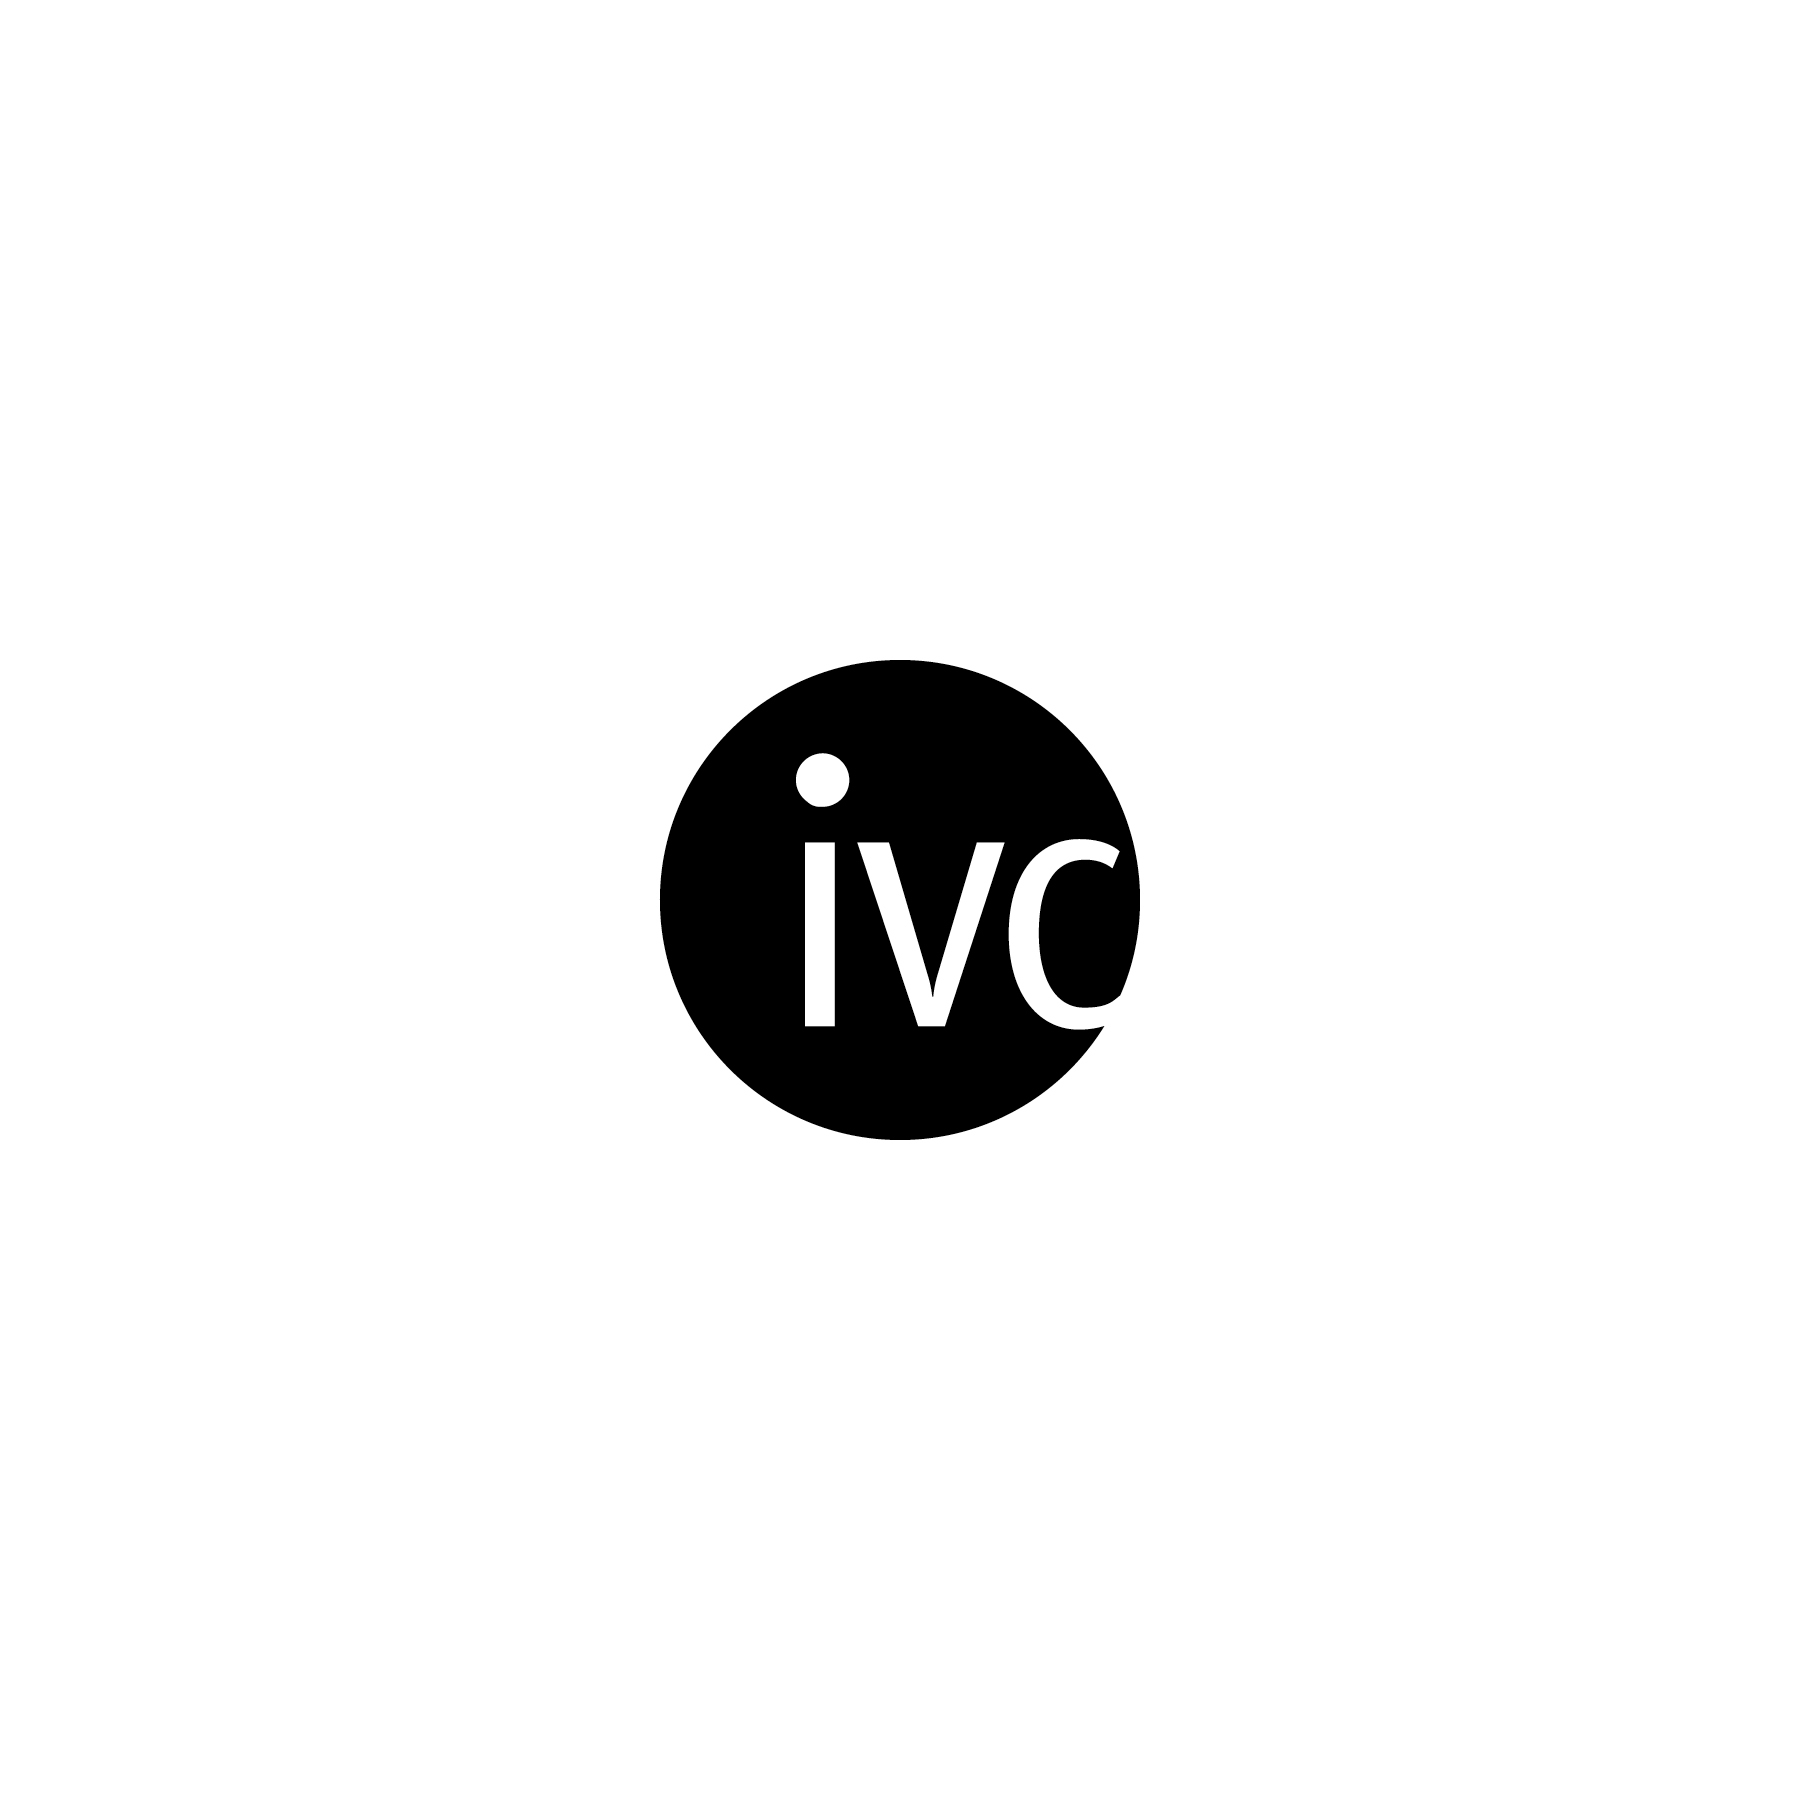 T me vcc live. IVC логотип. IVC линолеум логотип. Линолеум IVC logo. IVC напольные покрытия лого.